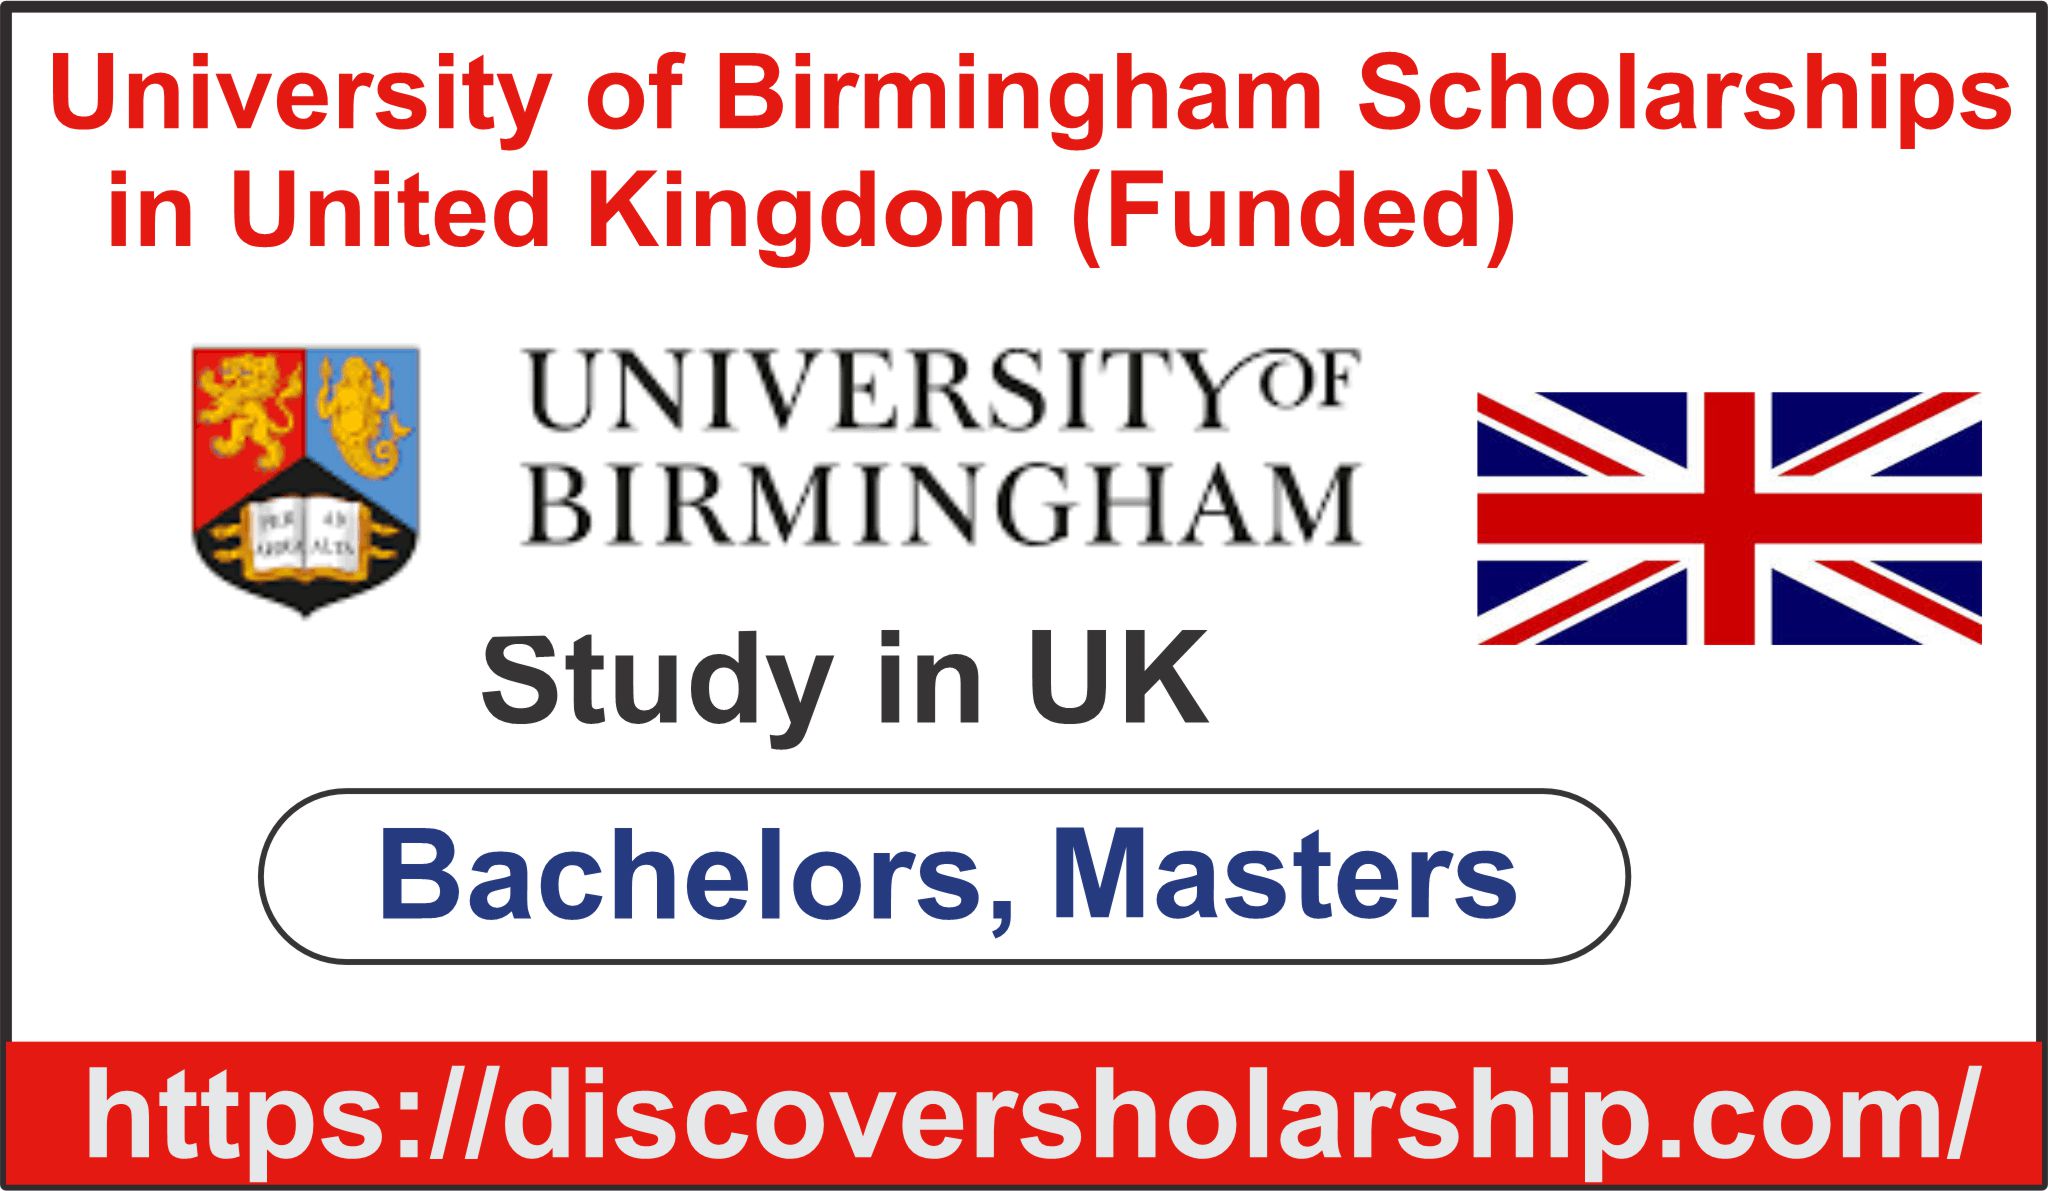 University of Birmingham Scholarships in the United Kingdom (Funded)